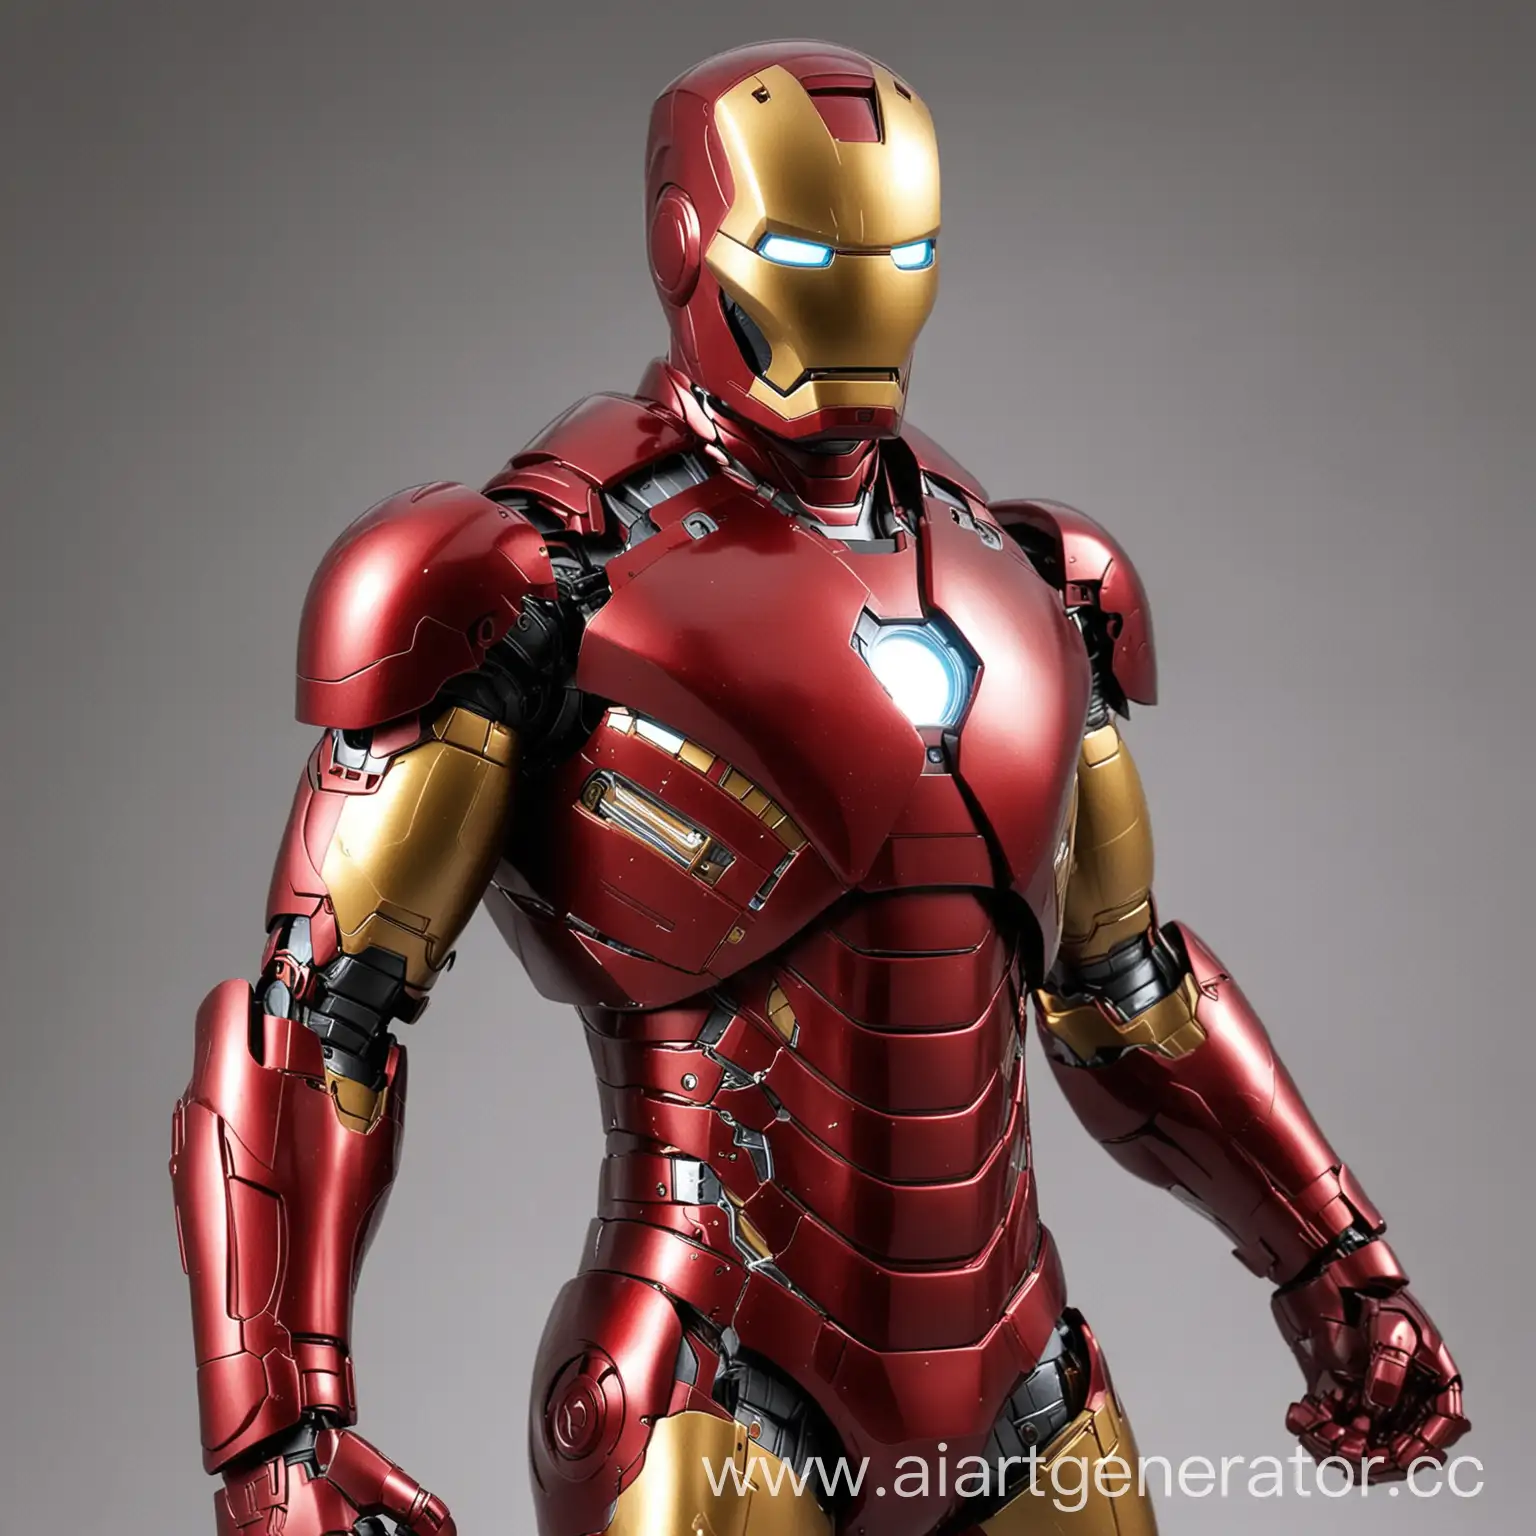 Futuristic-Iron-Man-Suit-Displayed-in-HighTech-Laboratory